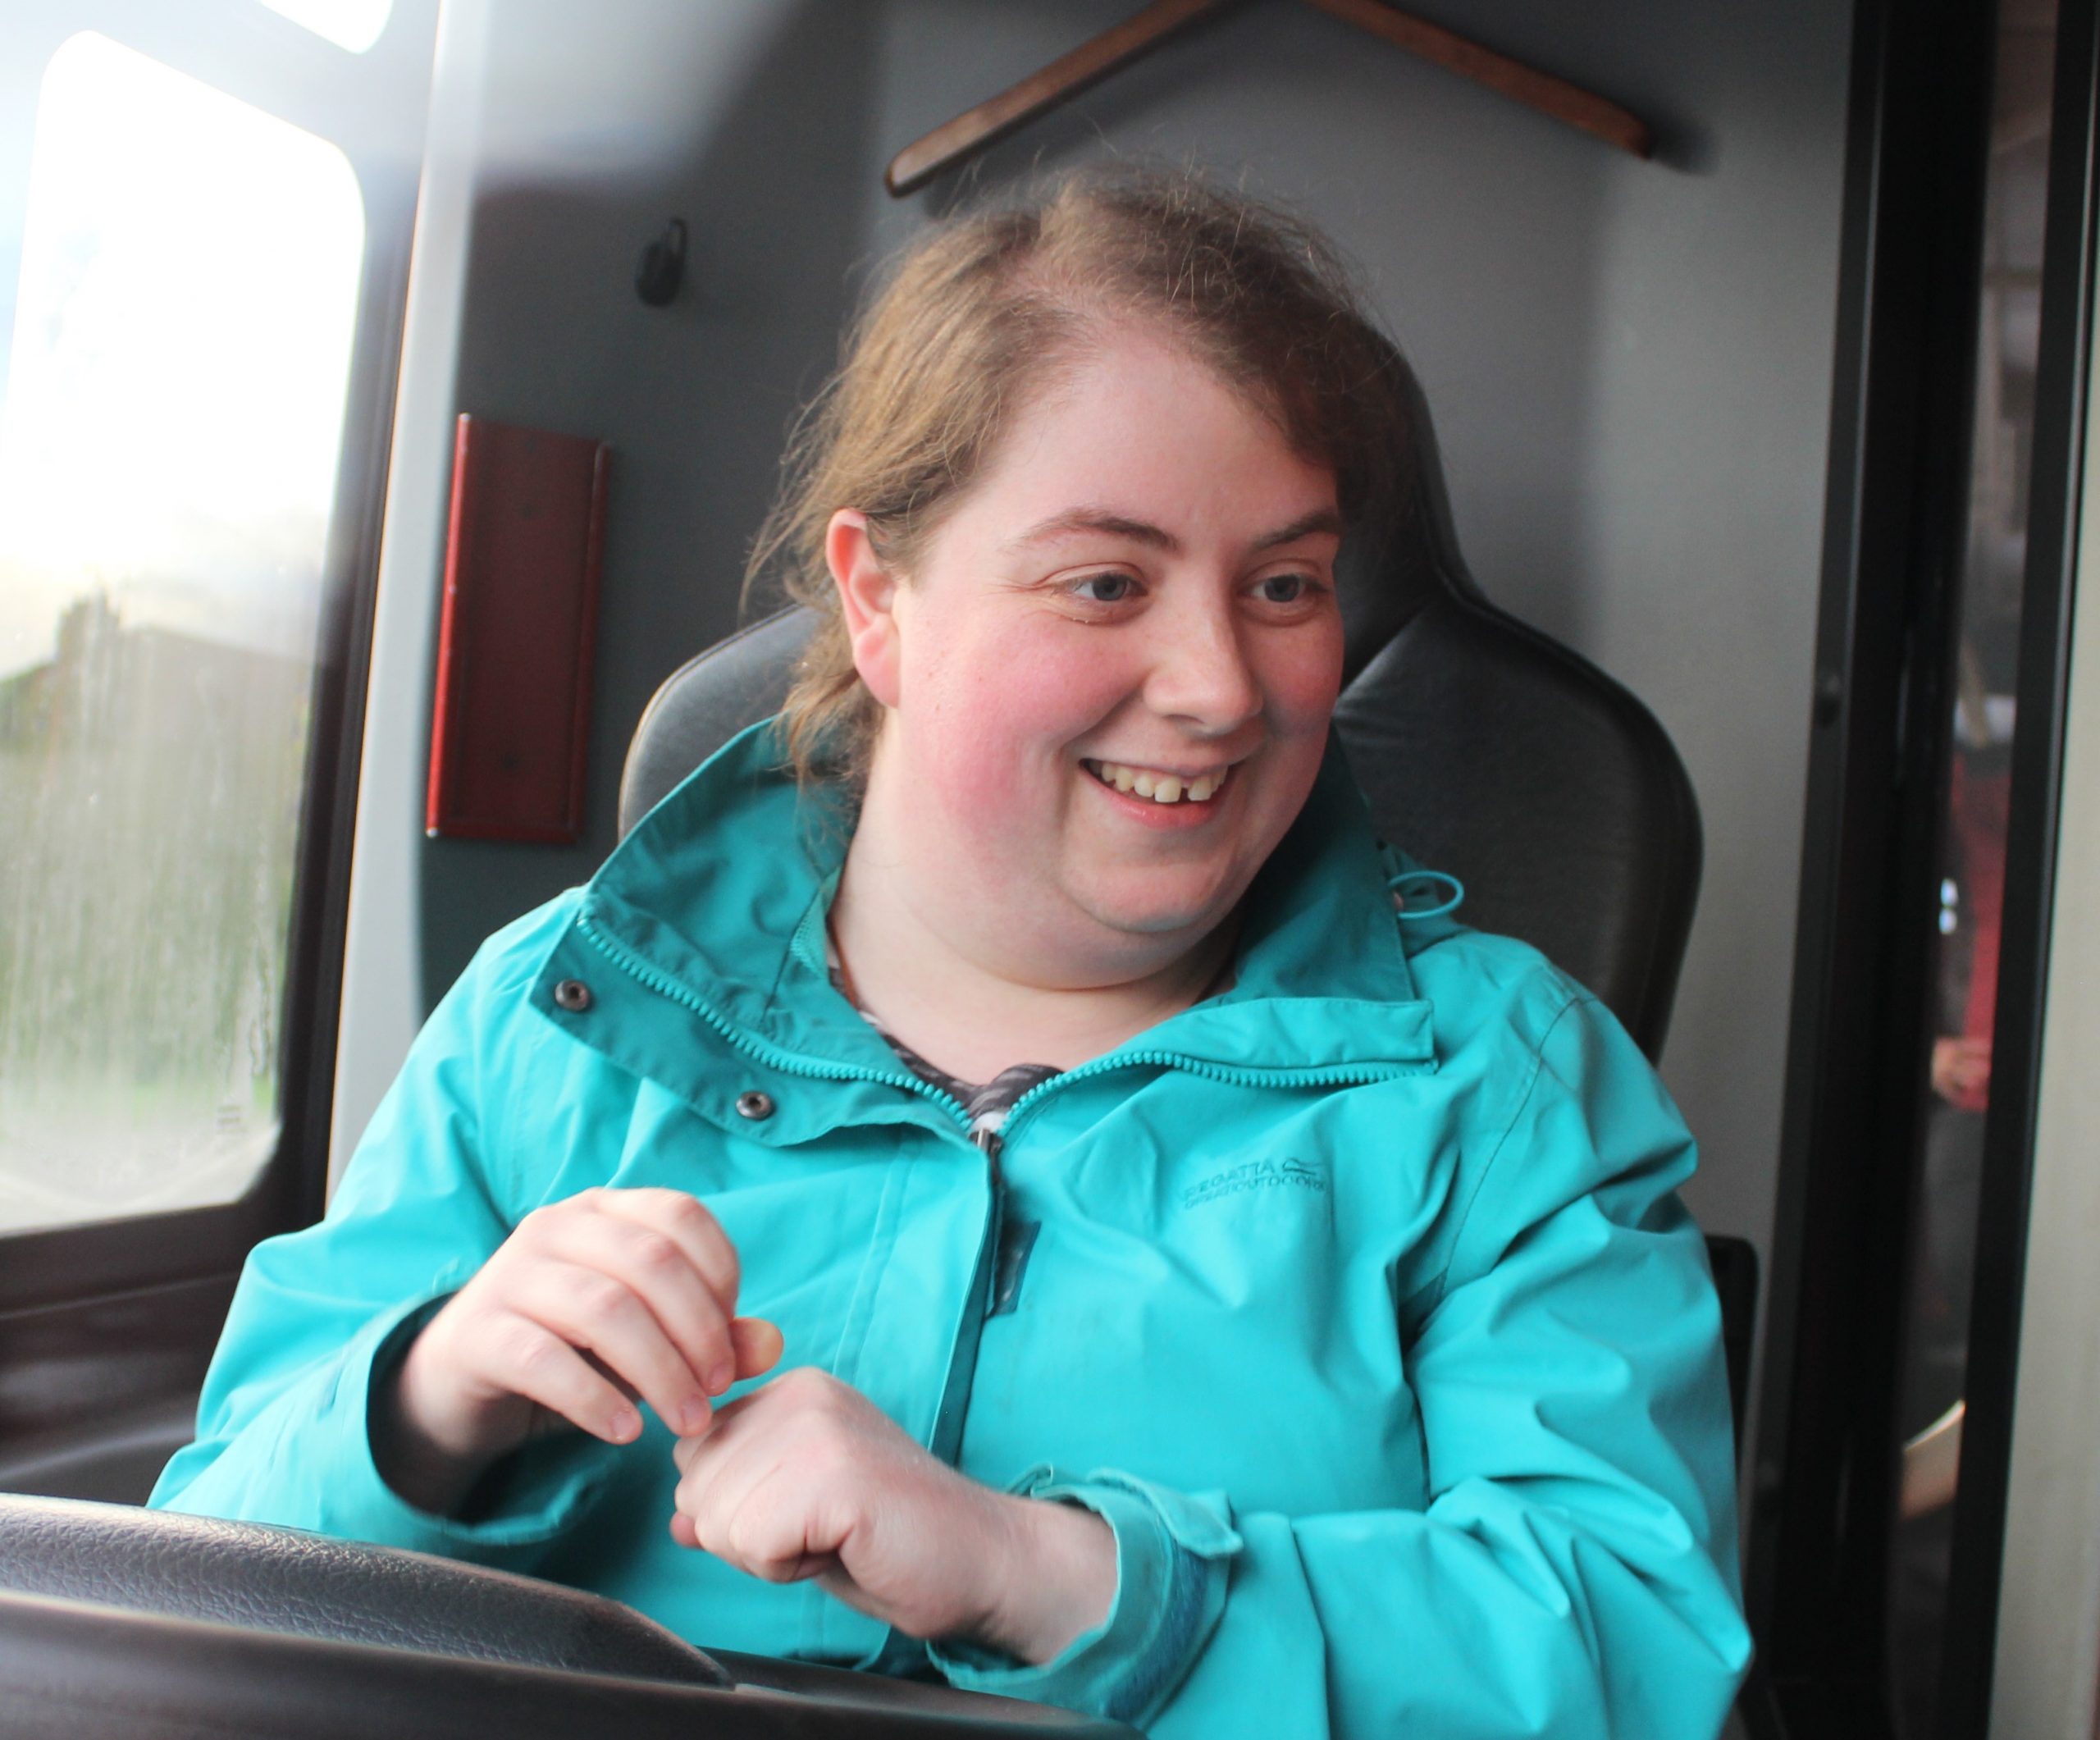 Kellie smiling, wearing a turquoise jacket.